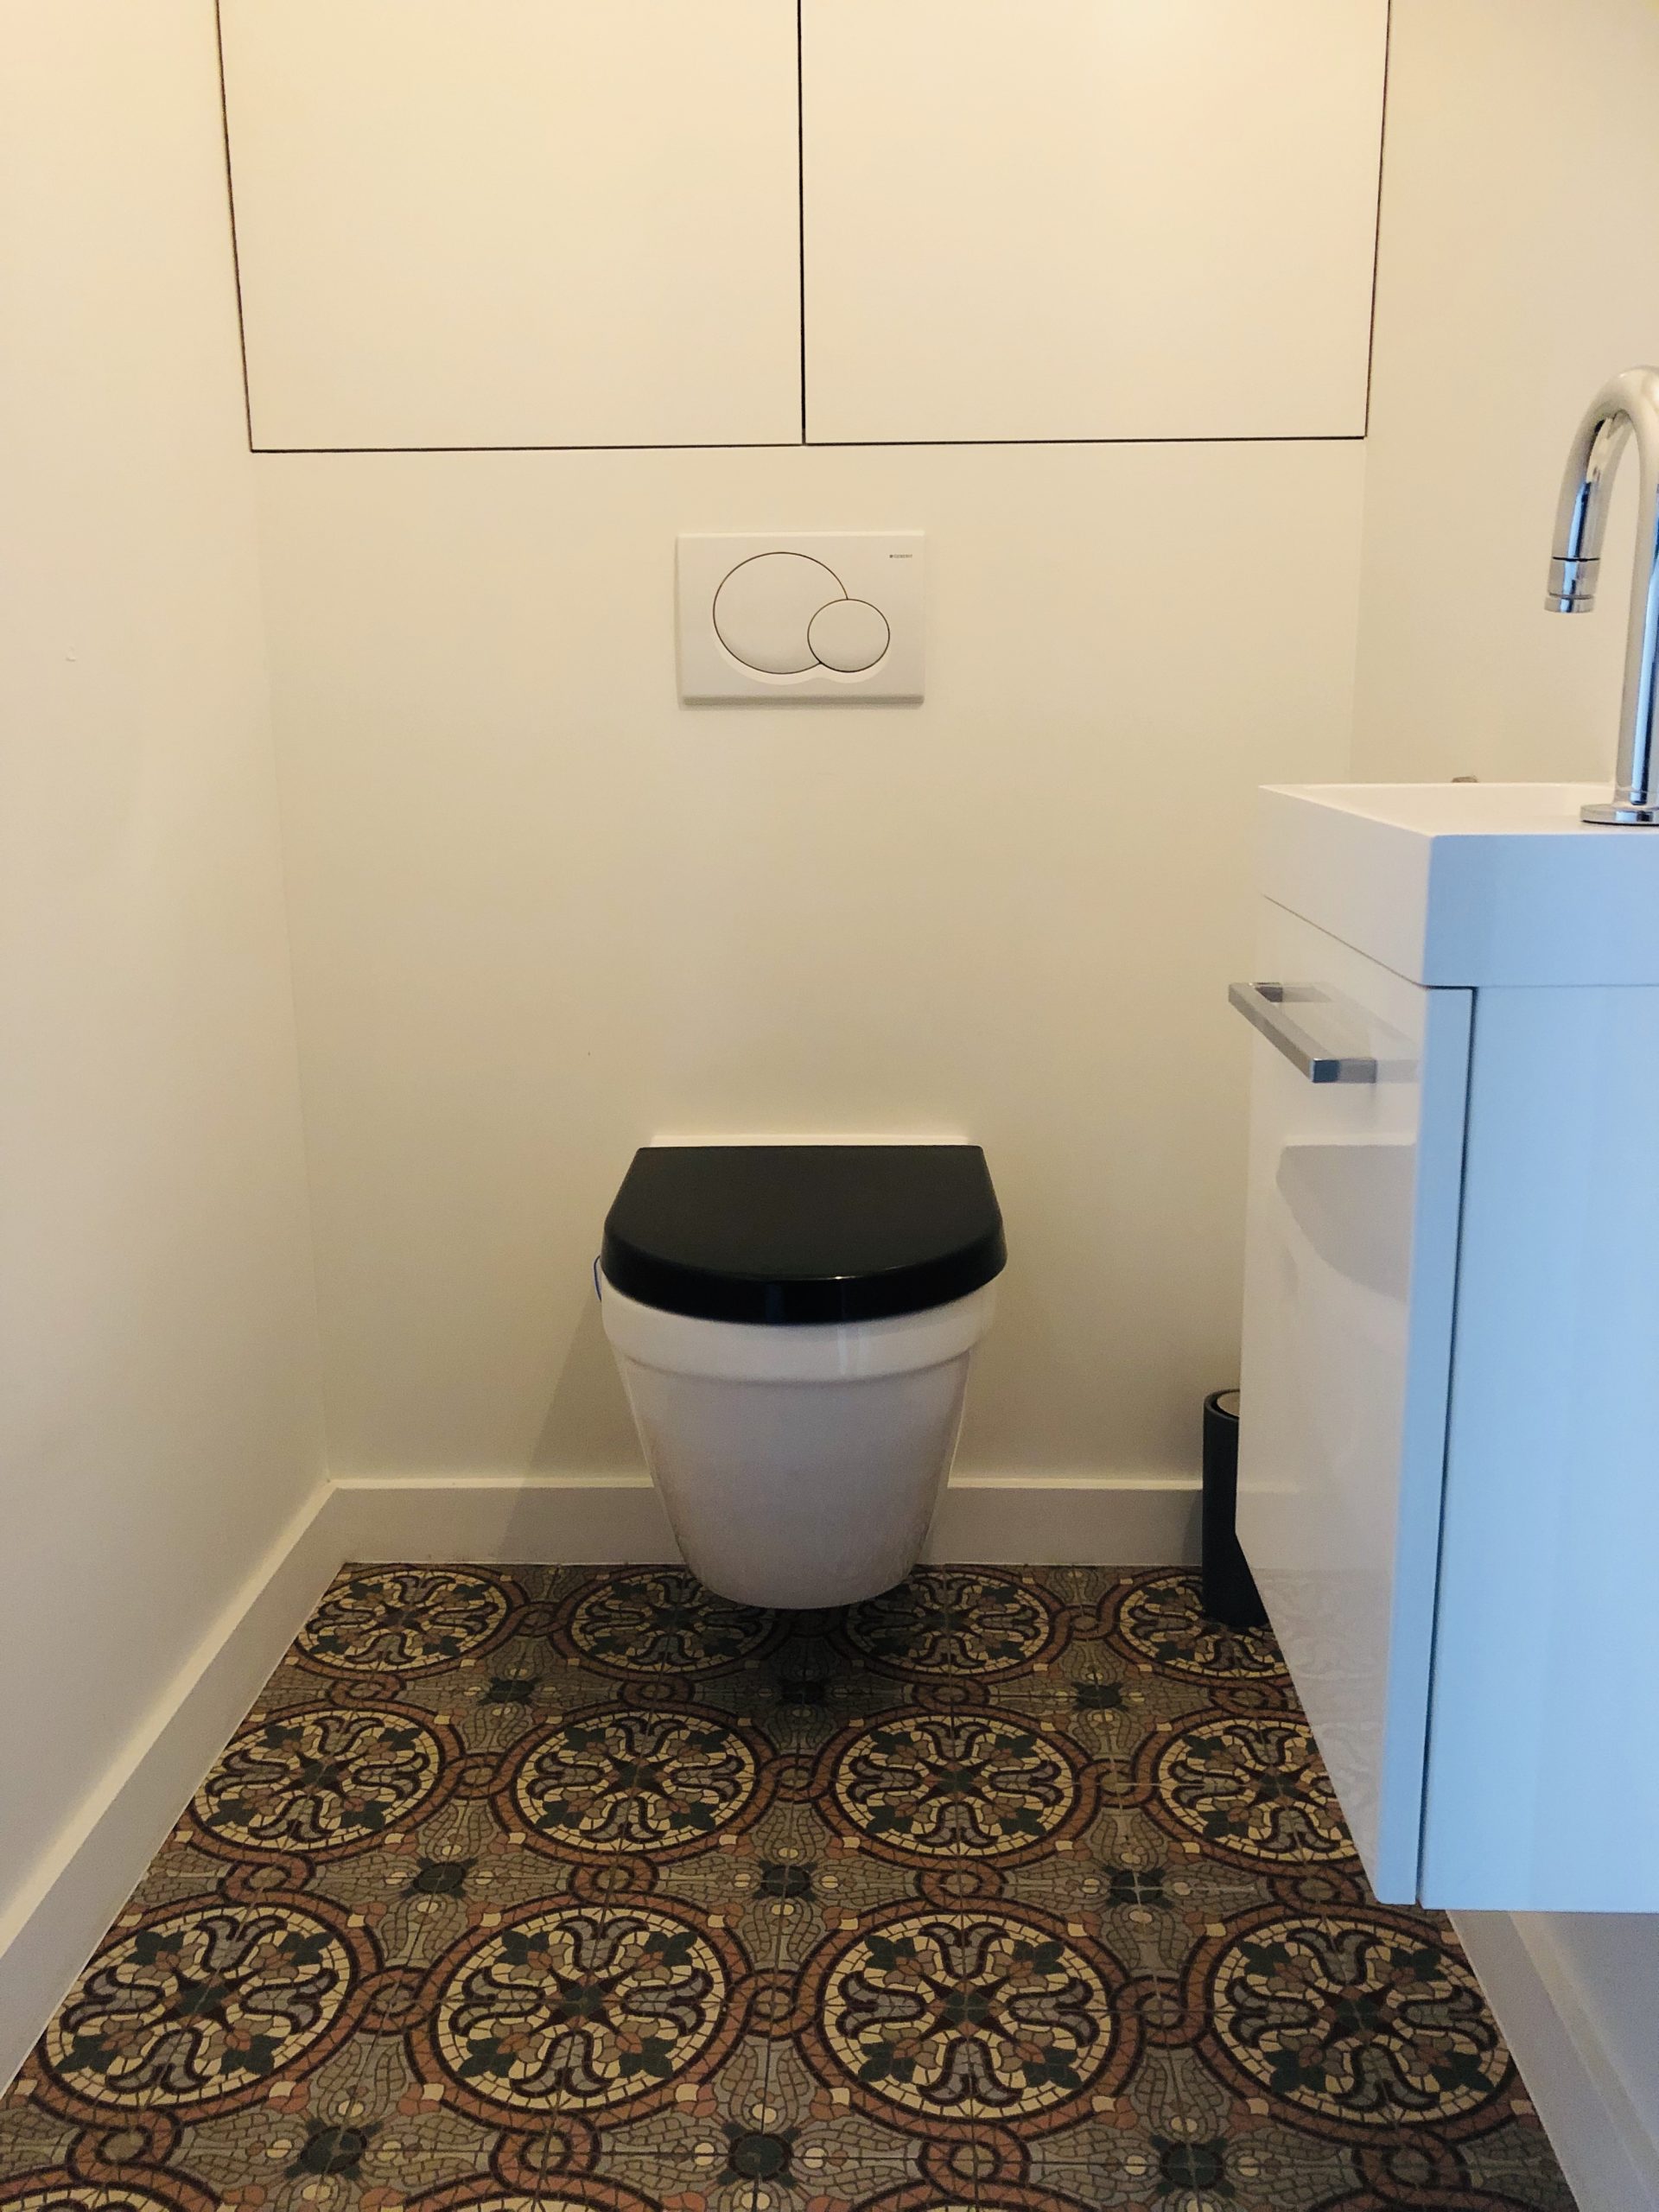 toilet - ktichen - house for rent in knokke